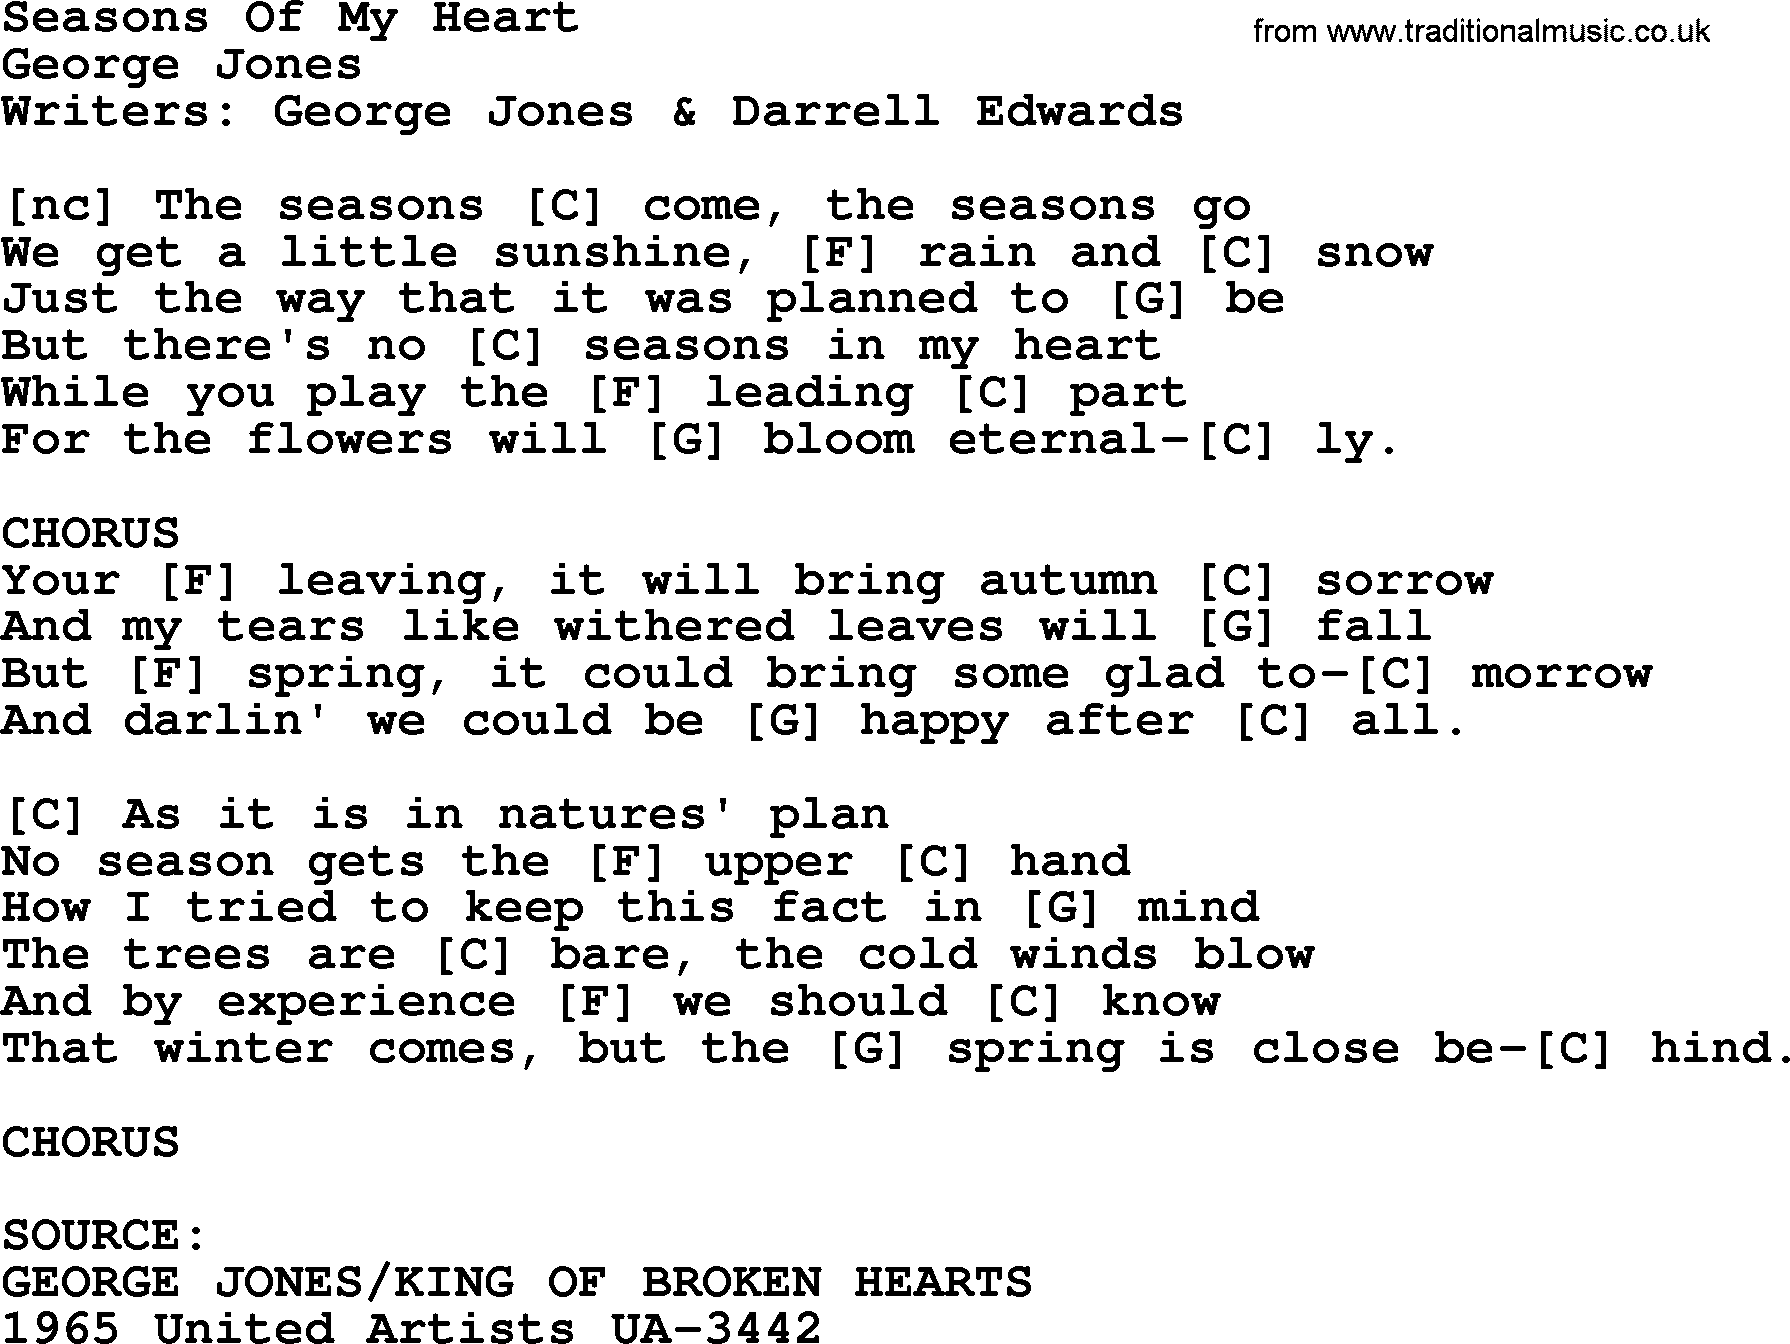 George Jones song: Seasons Of My Heart, lyrics and chords